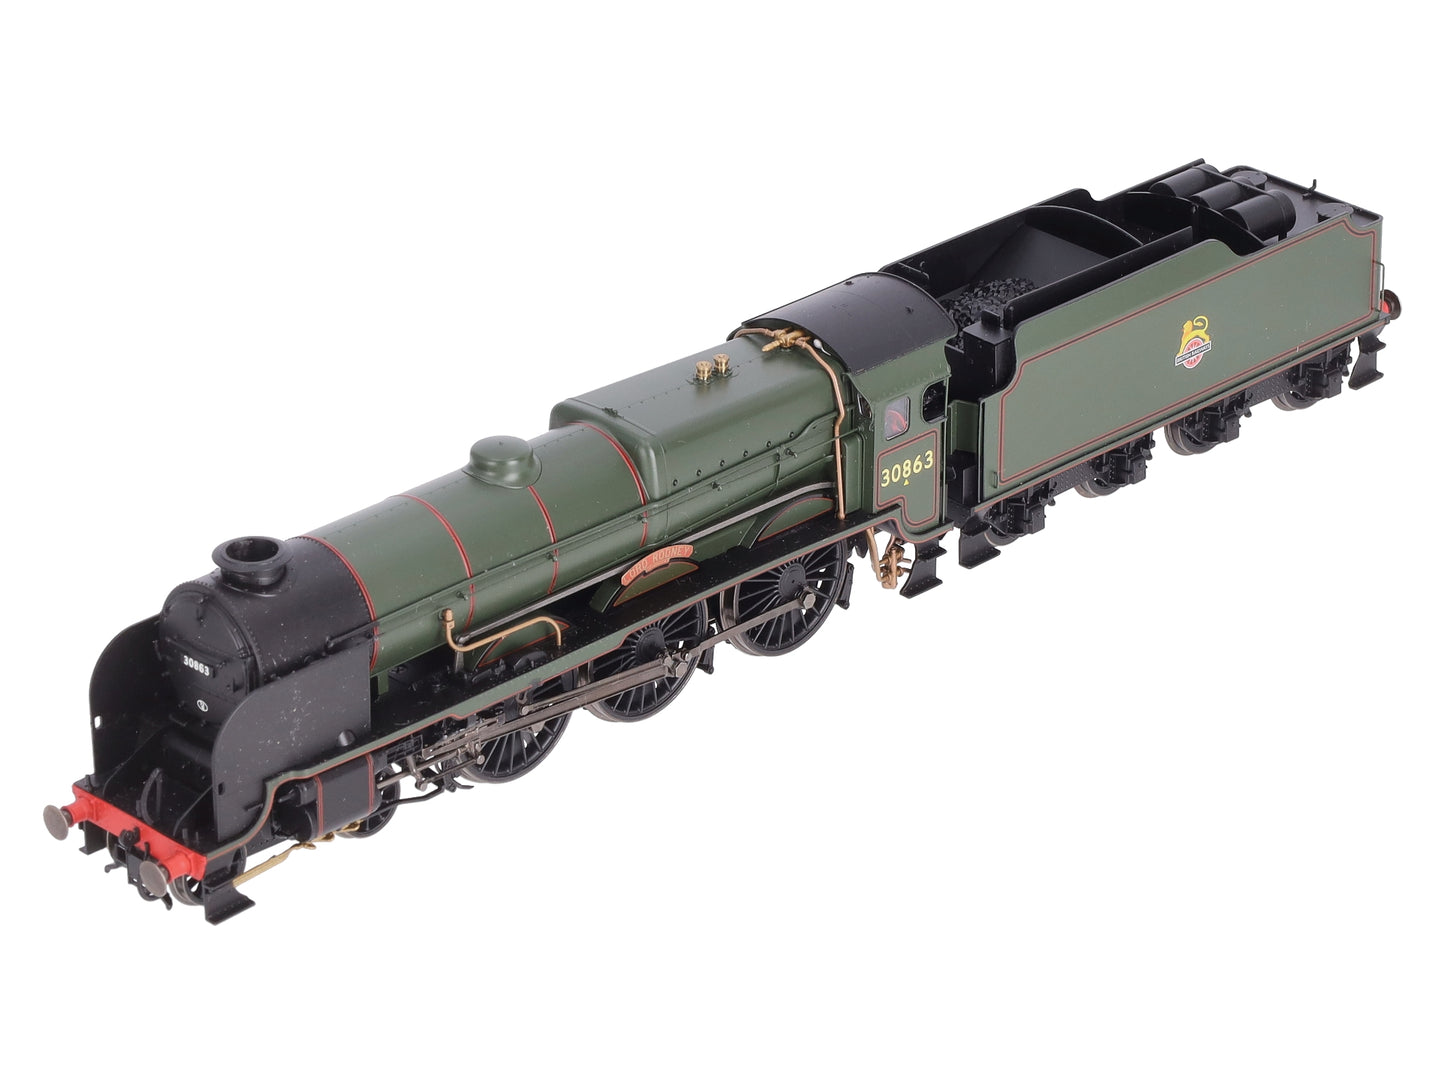 Hornby R3635 OO BR Lord Rodney Lord Nelson Steam Loco & Tender #30863 w/DCC LN/Box